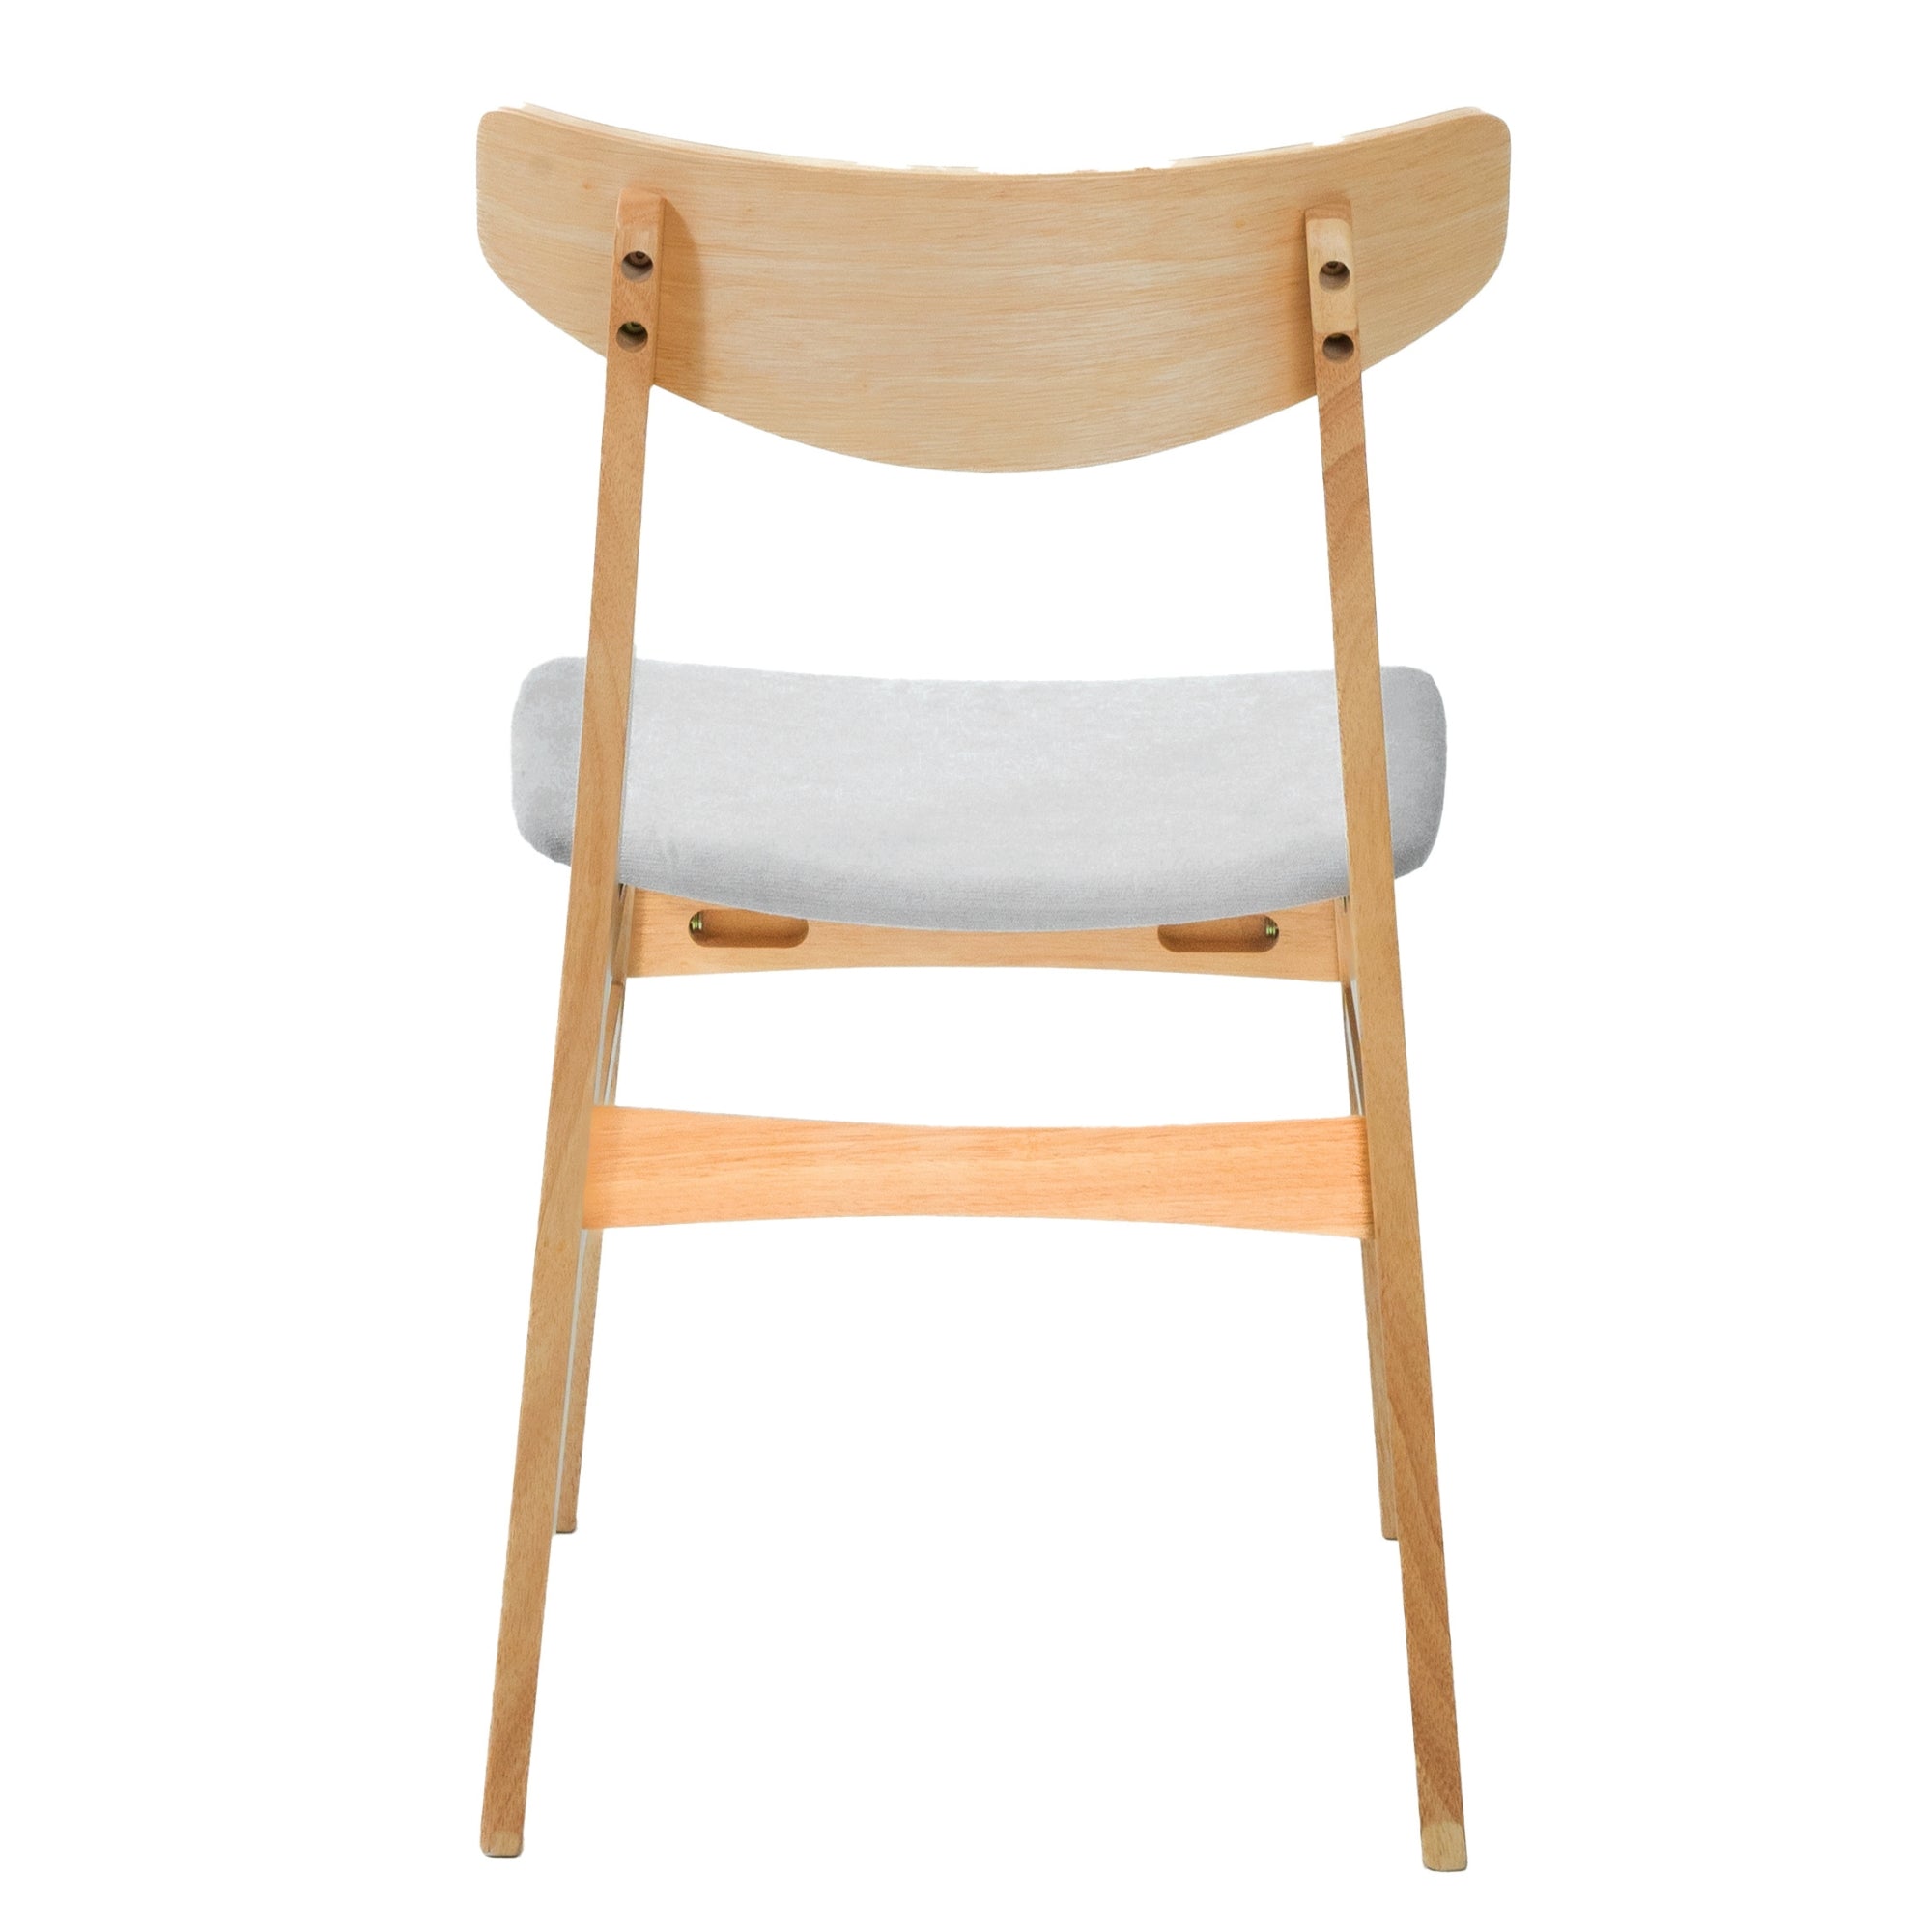 4pc Fabric Seat Rubberwood Dining Chairs, Scandinavian Style